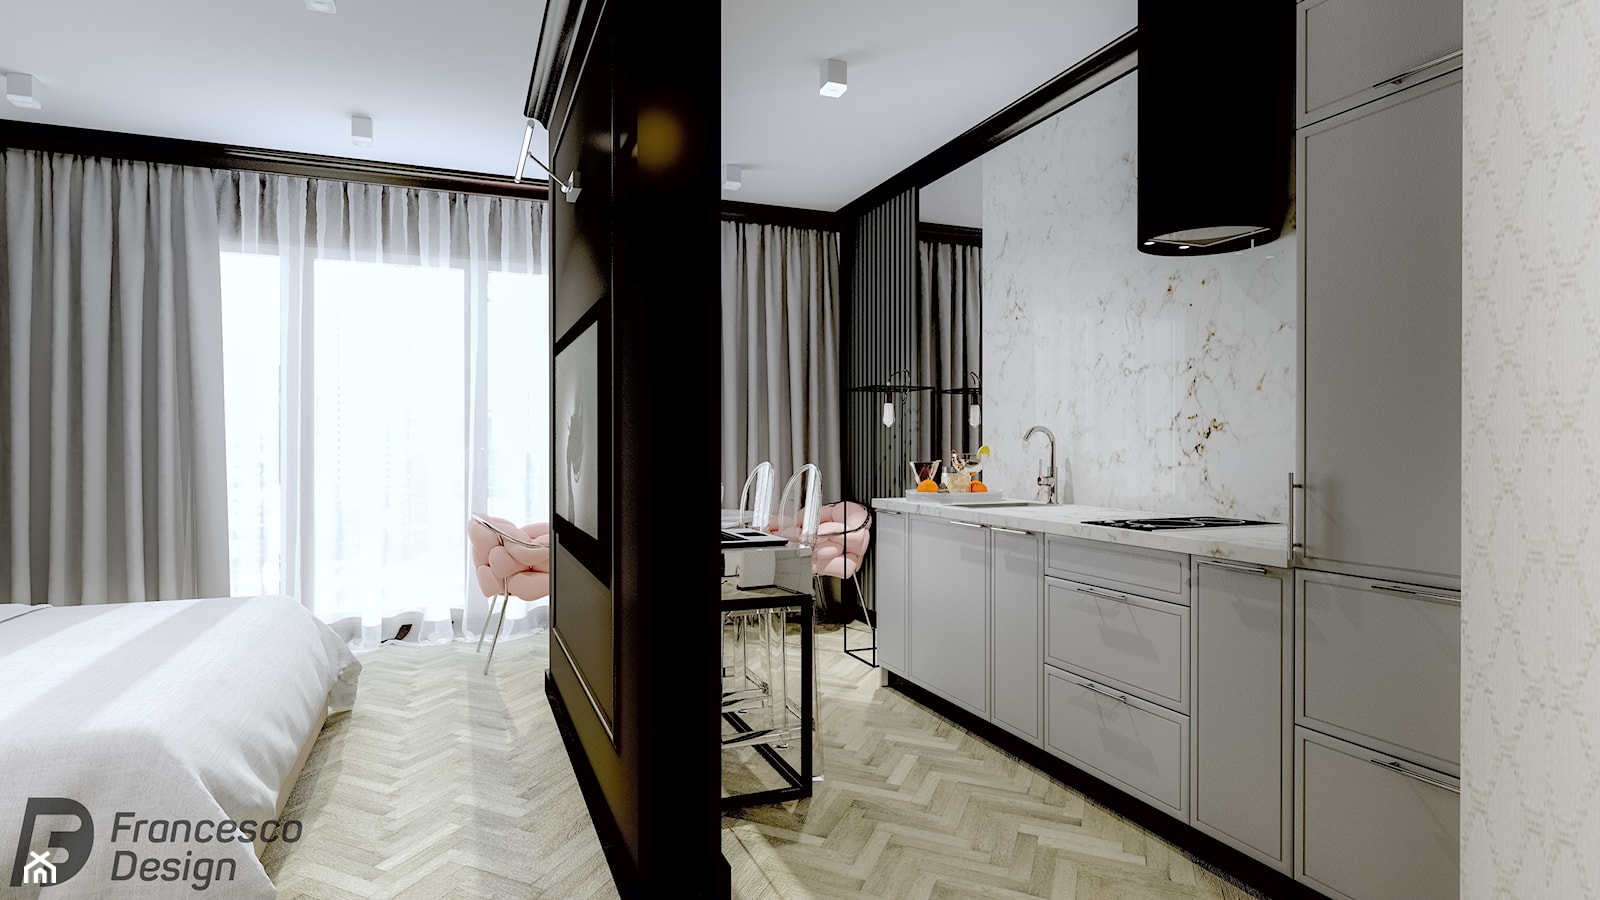 Apartament hotelowy - zdjęcie od FRANCESCO DESIGN - Homebook